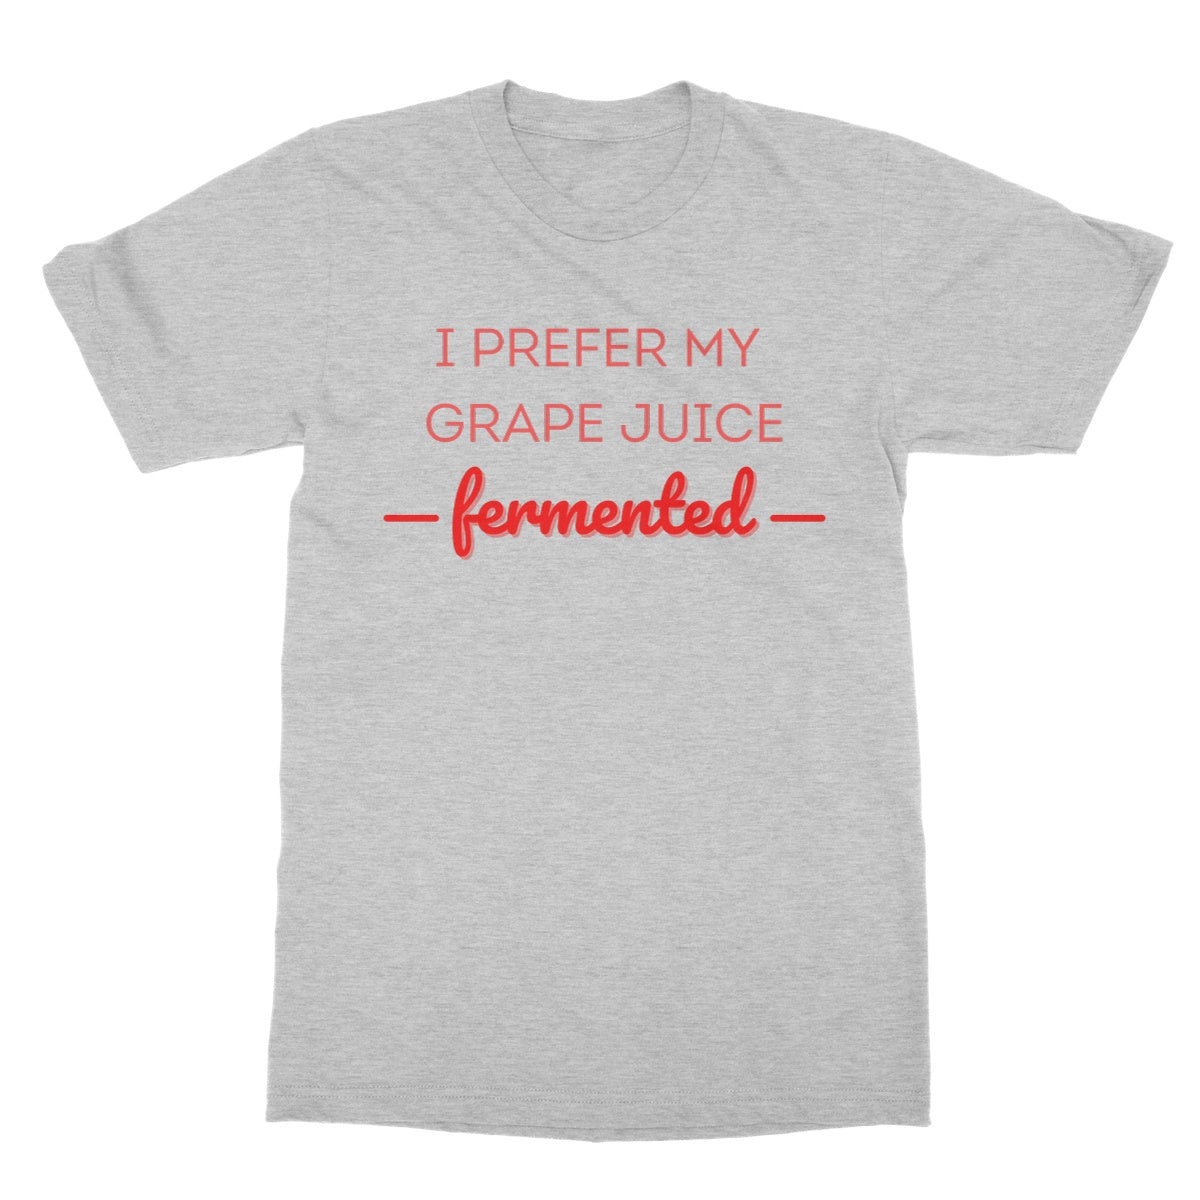 I prefer my grape juice fermented t shirt grey